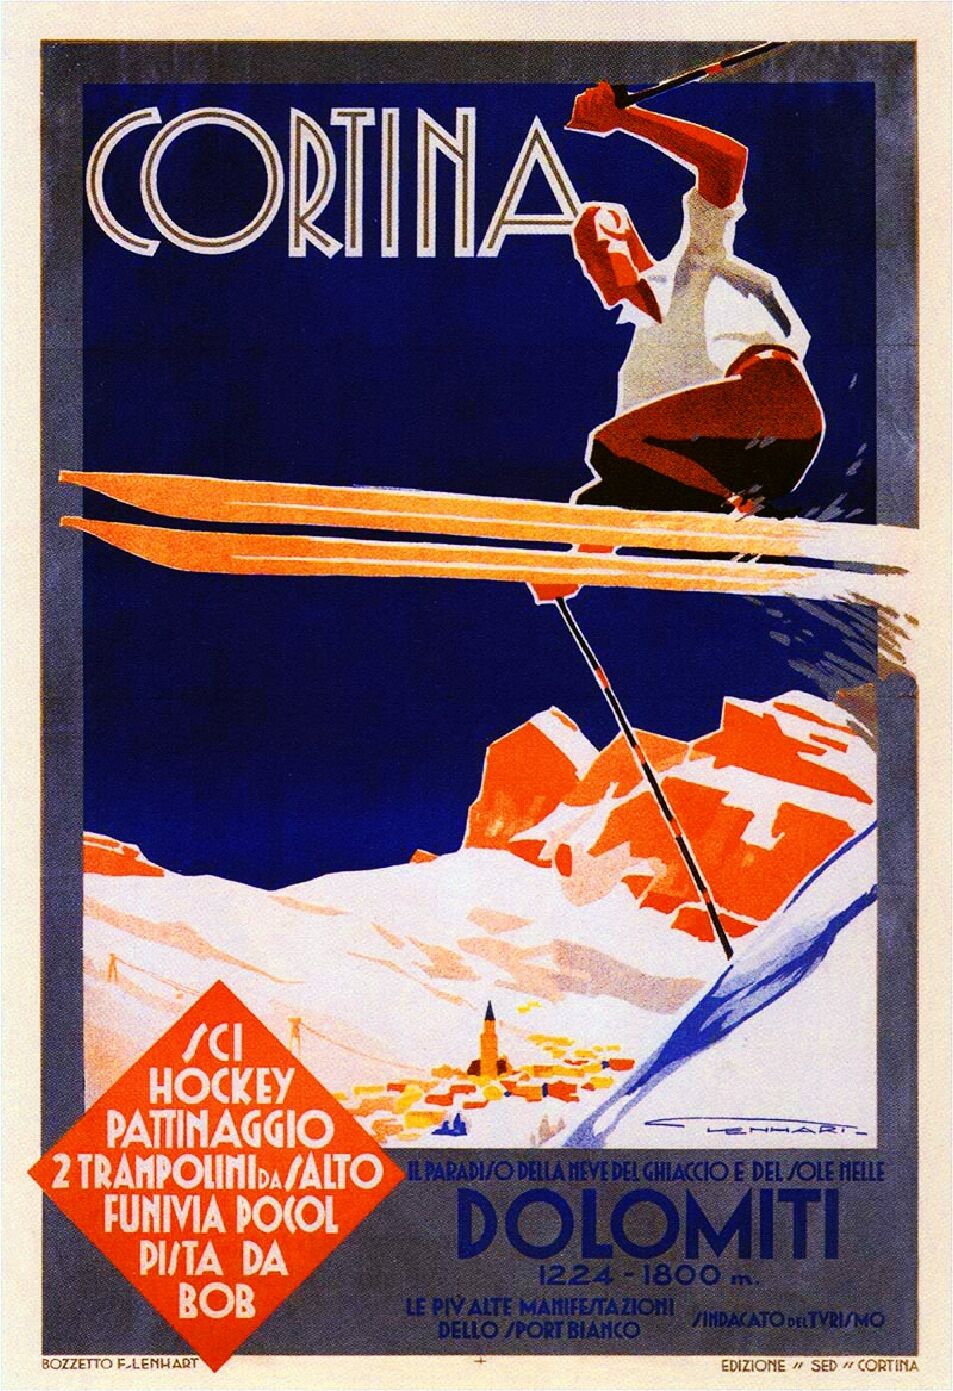 Cortina Italy Italian European Winter Ski Europe Travel Advertisement Poster